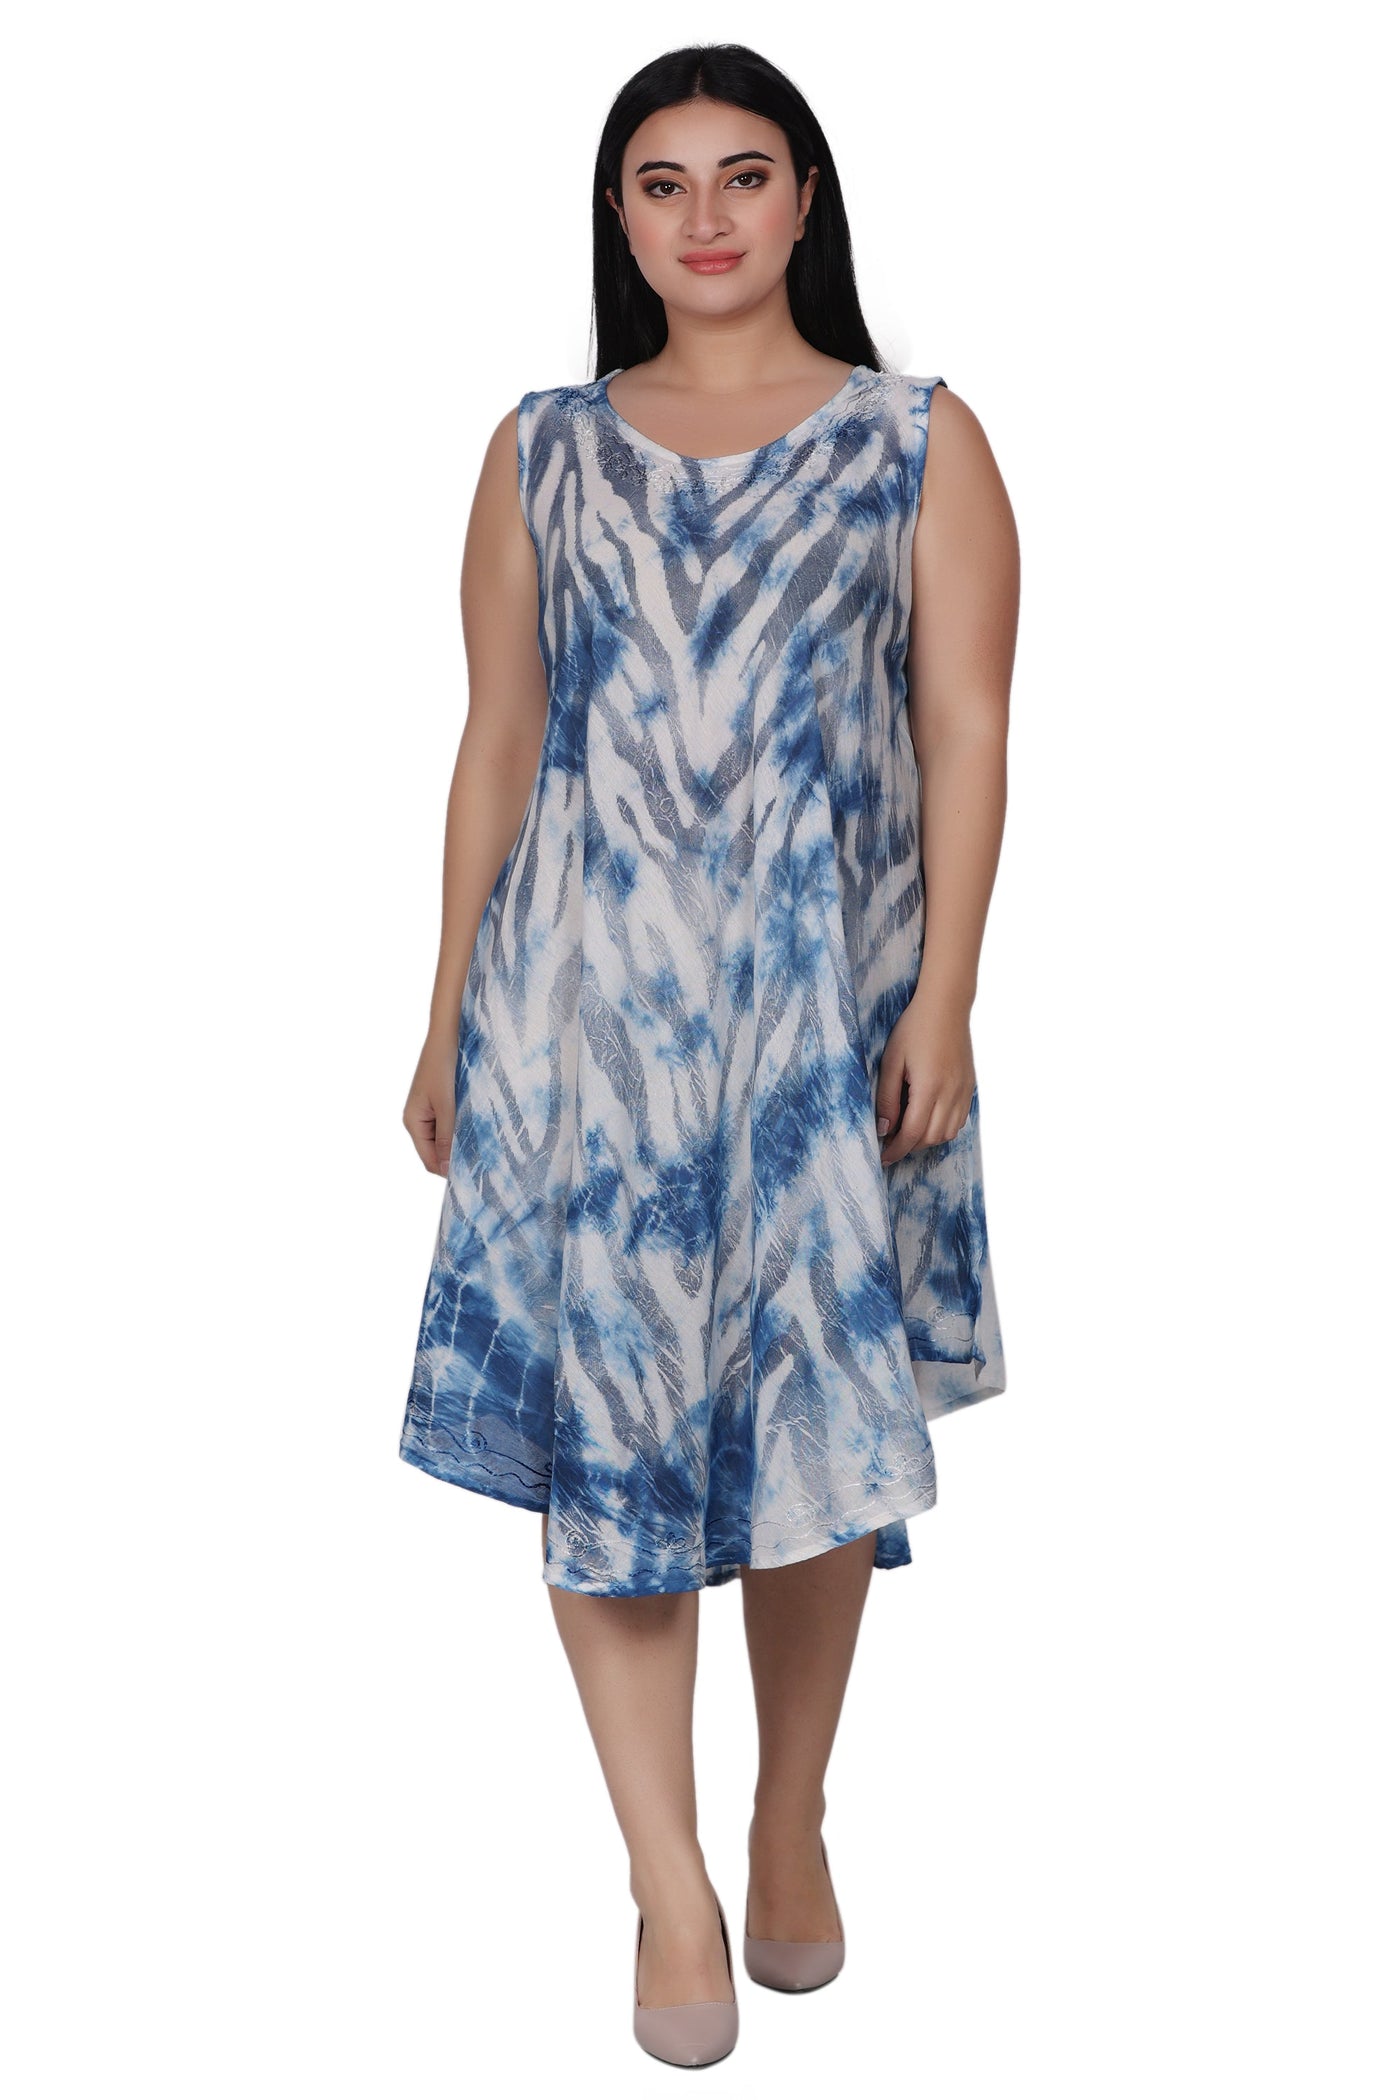 Zebra Print Tie Dye Dress 482150R